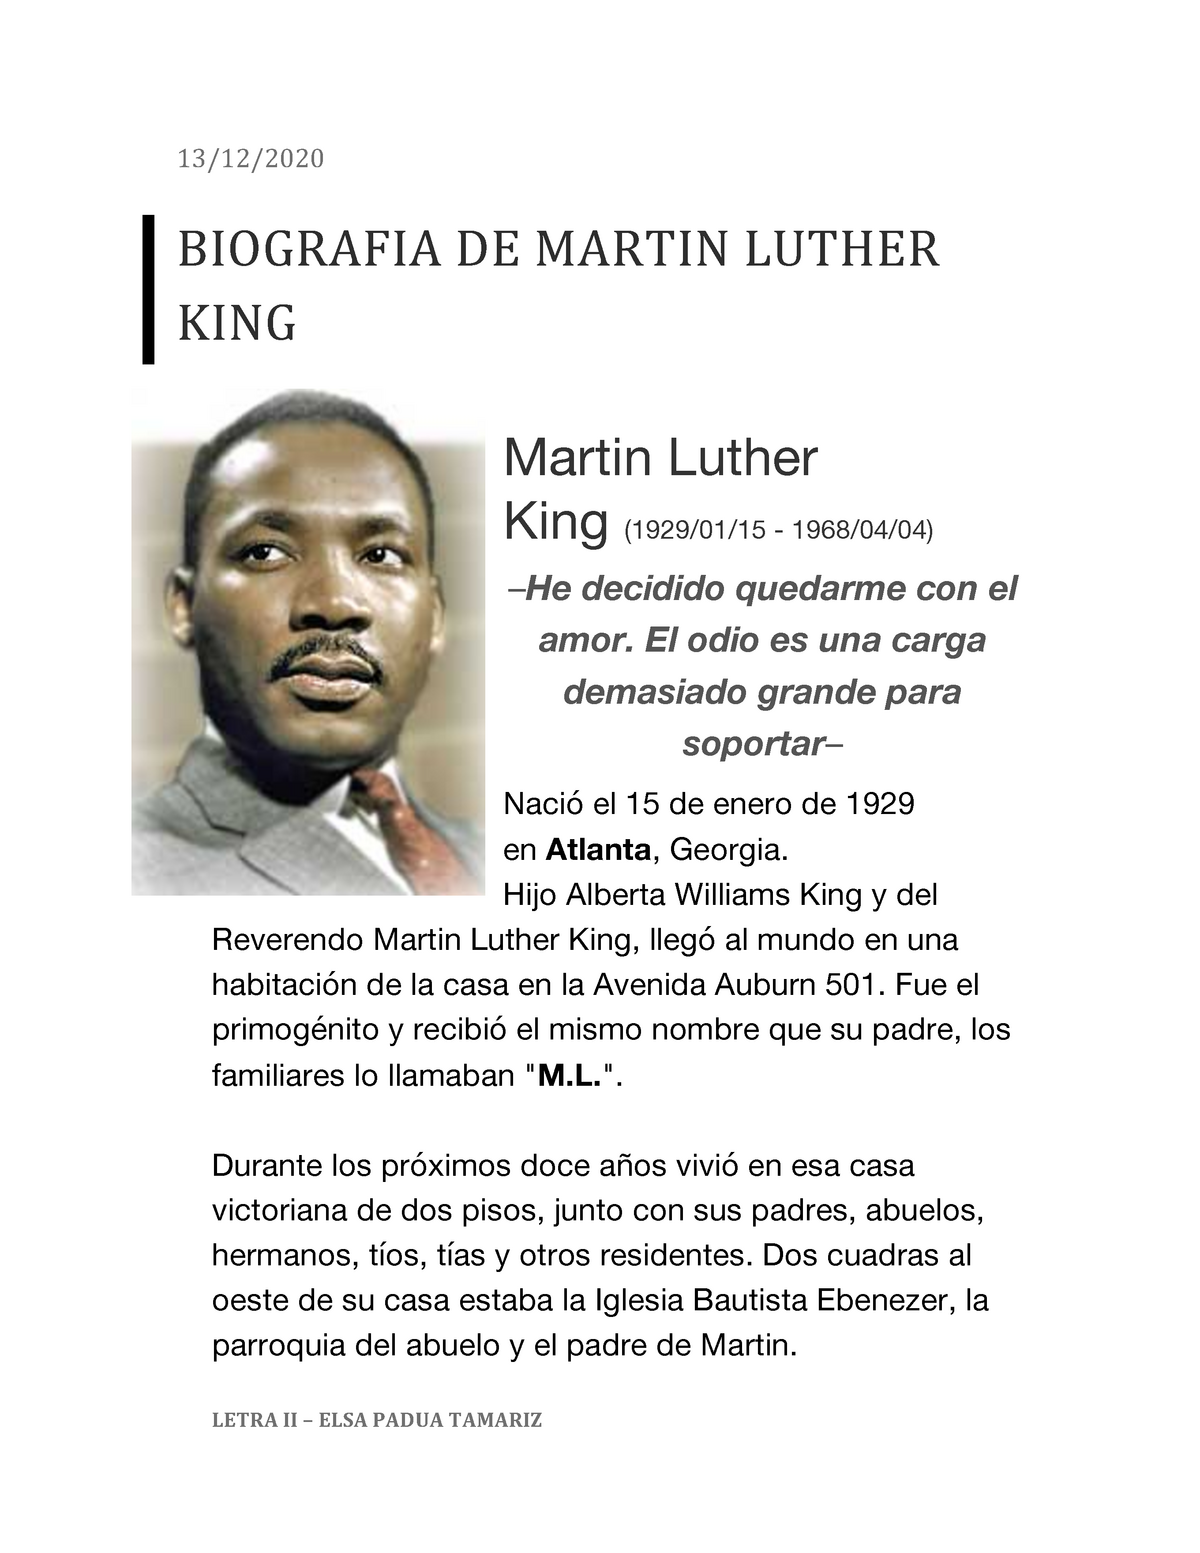 Martin Luther King Bioo Letra Ii Elsa Padua Tamariz 13 12 Biografia De Martin Luther King